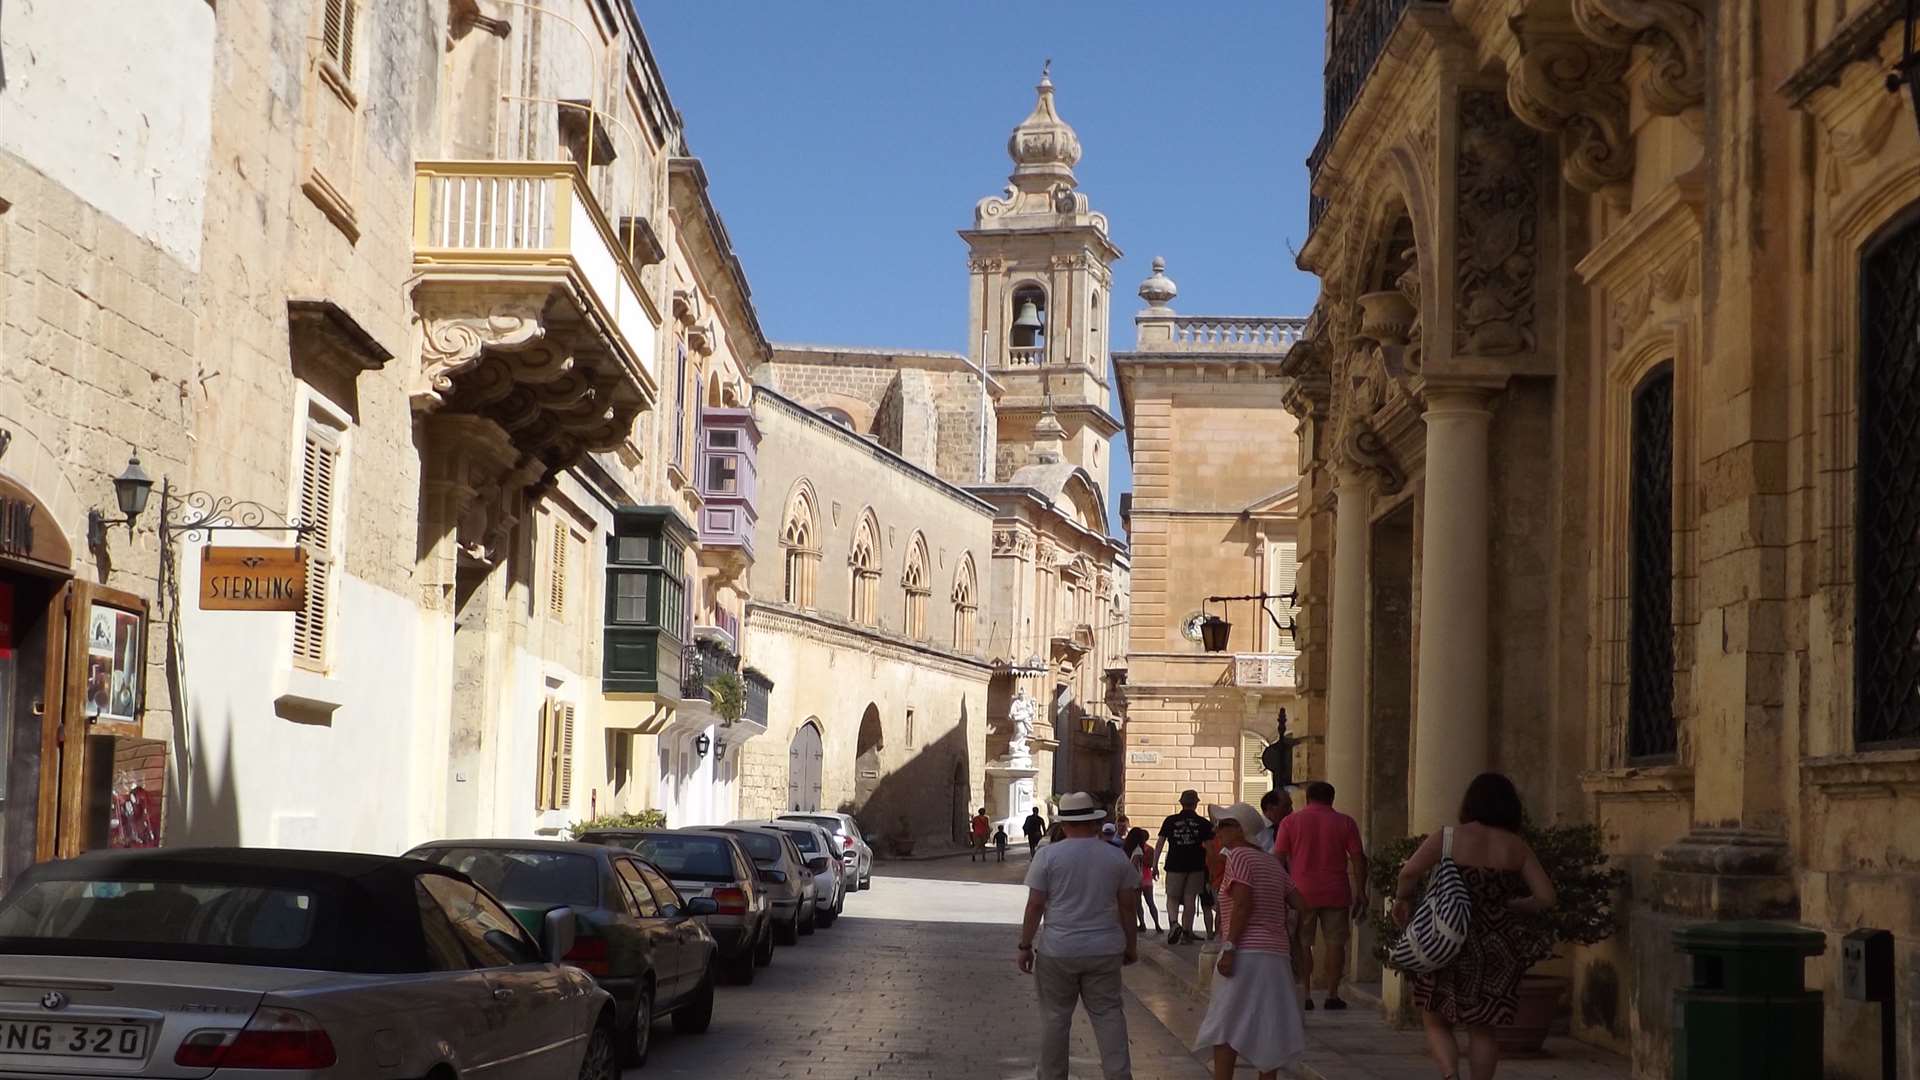 A typical street in Valletta